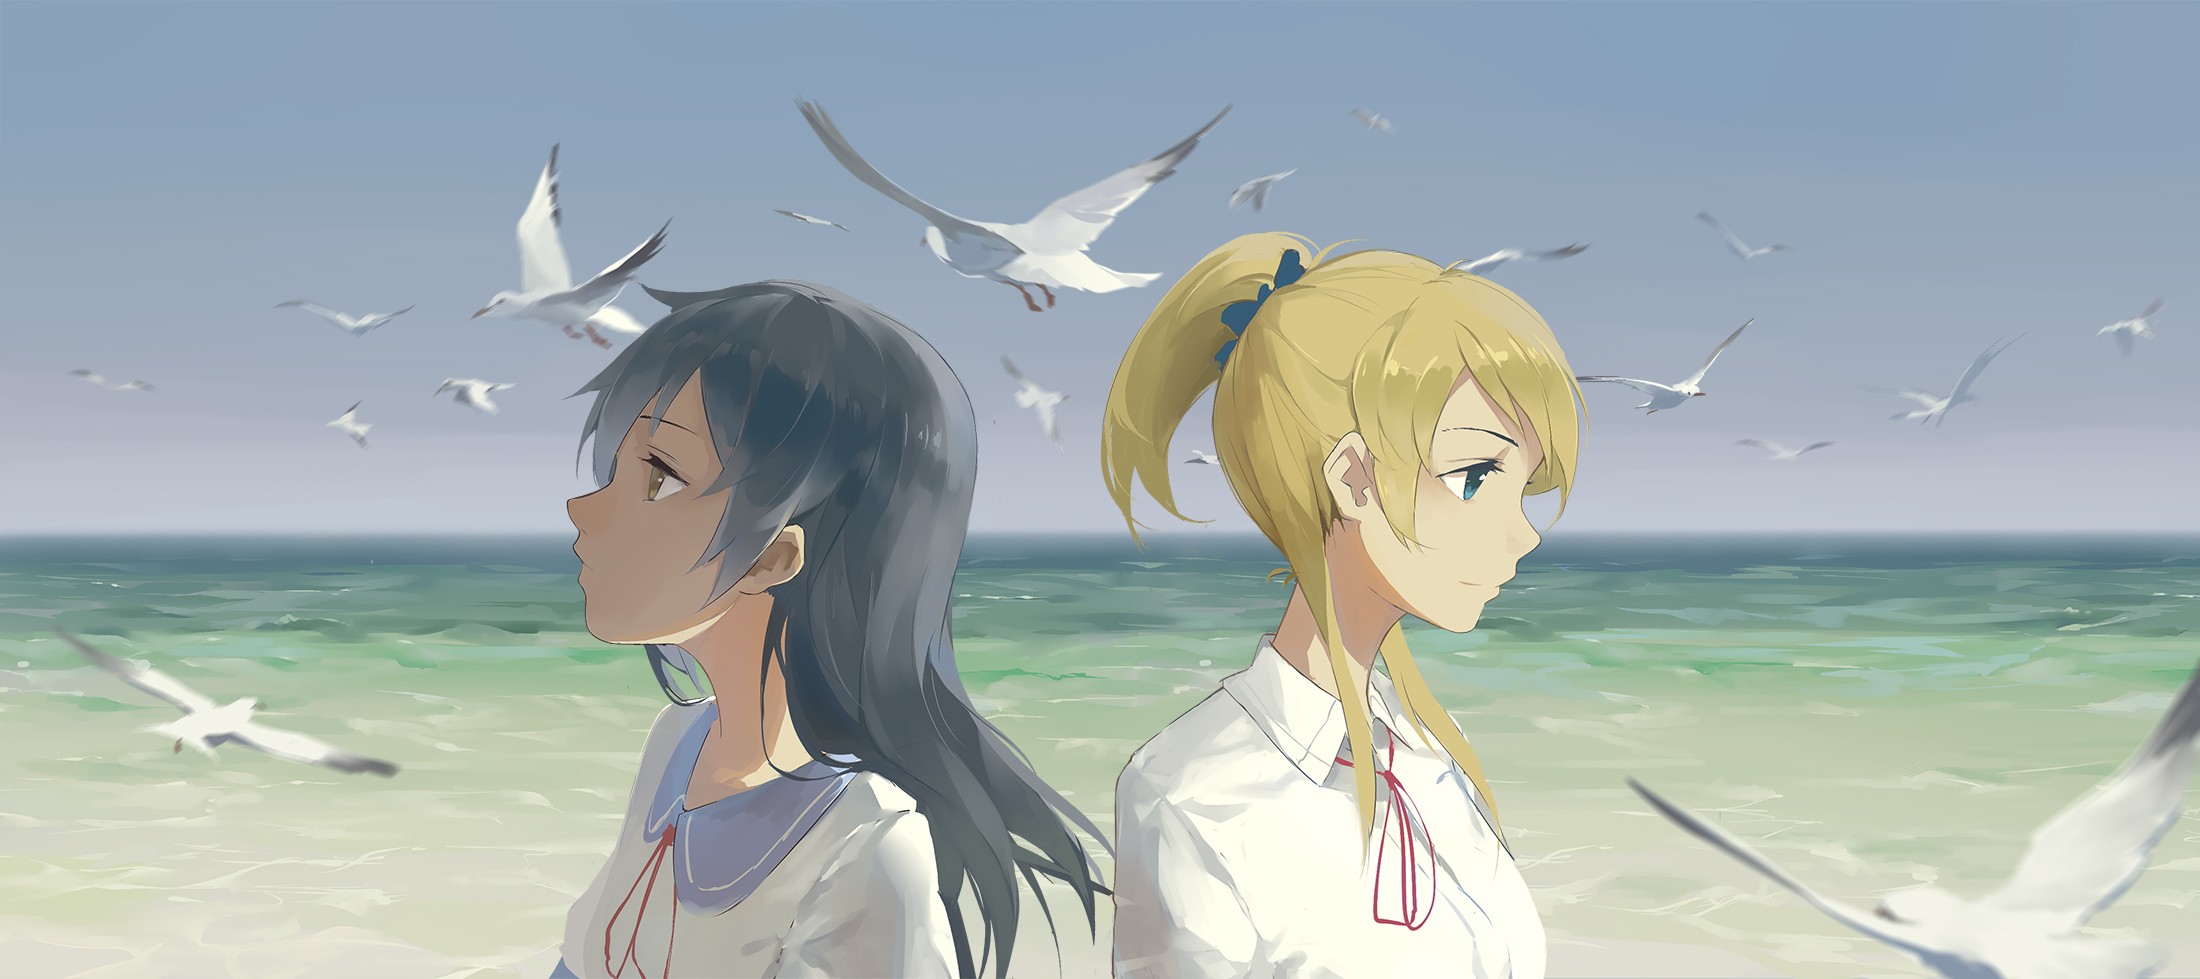 Anime 2200x979 anime Love Live! Ayase Eli Sonoda Umi anime girls women two women sea sky horizon birds blonde dark hair face women outdoors outdoors